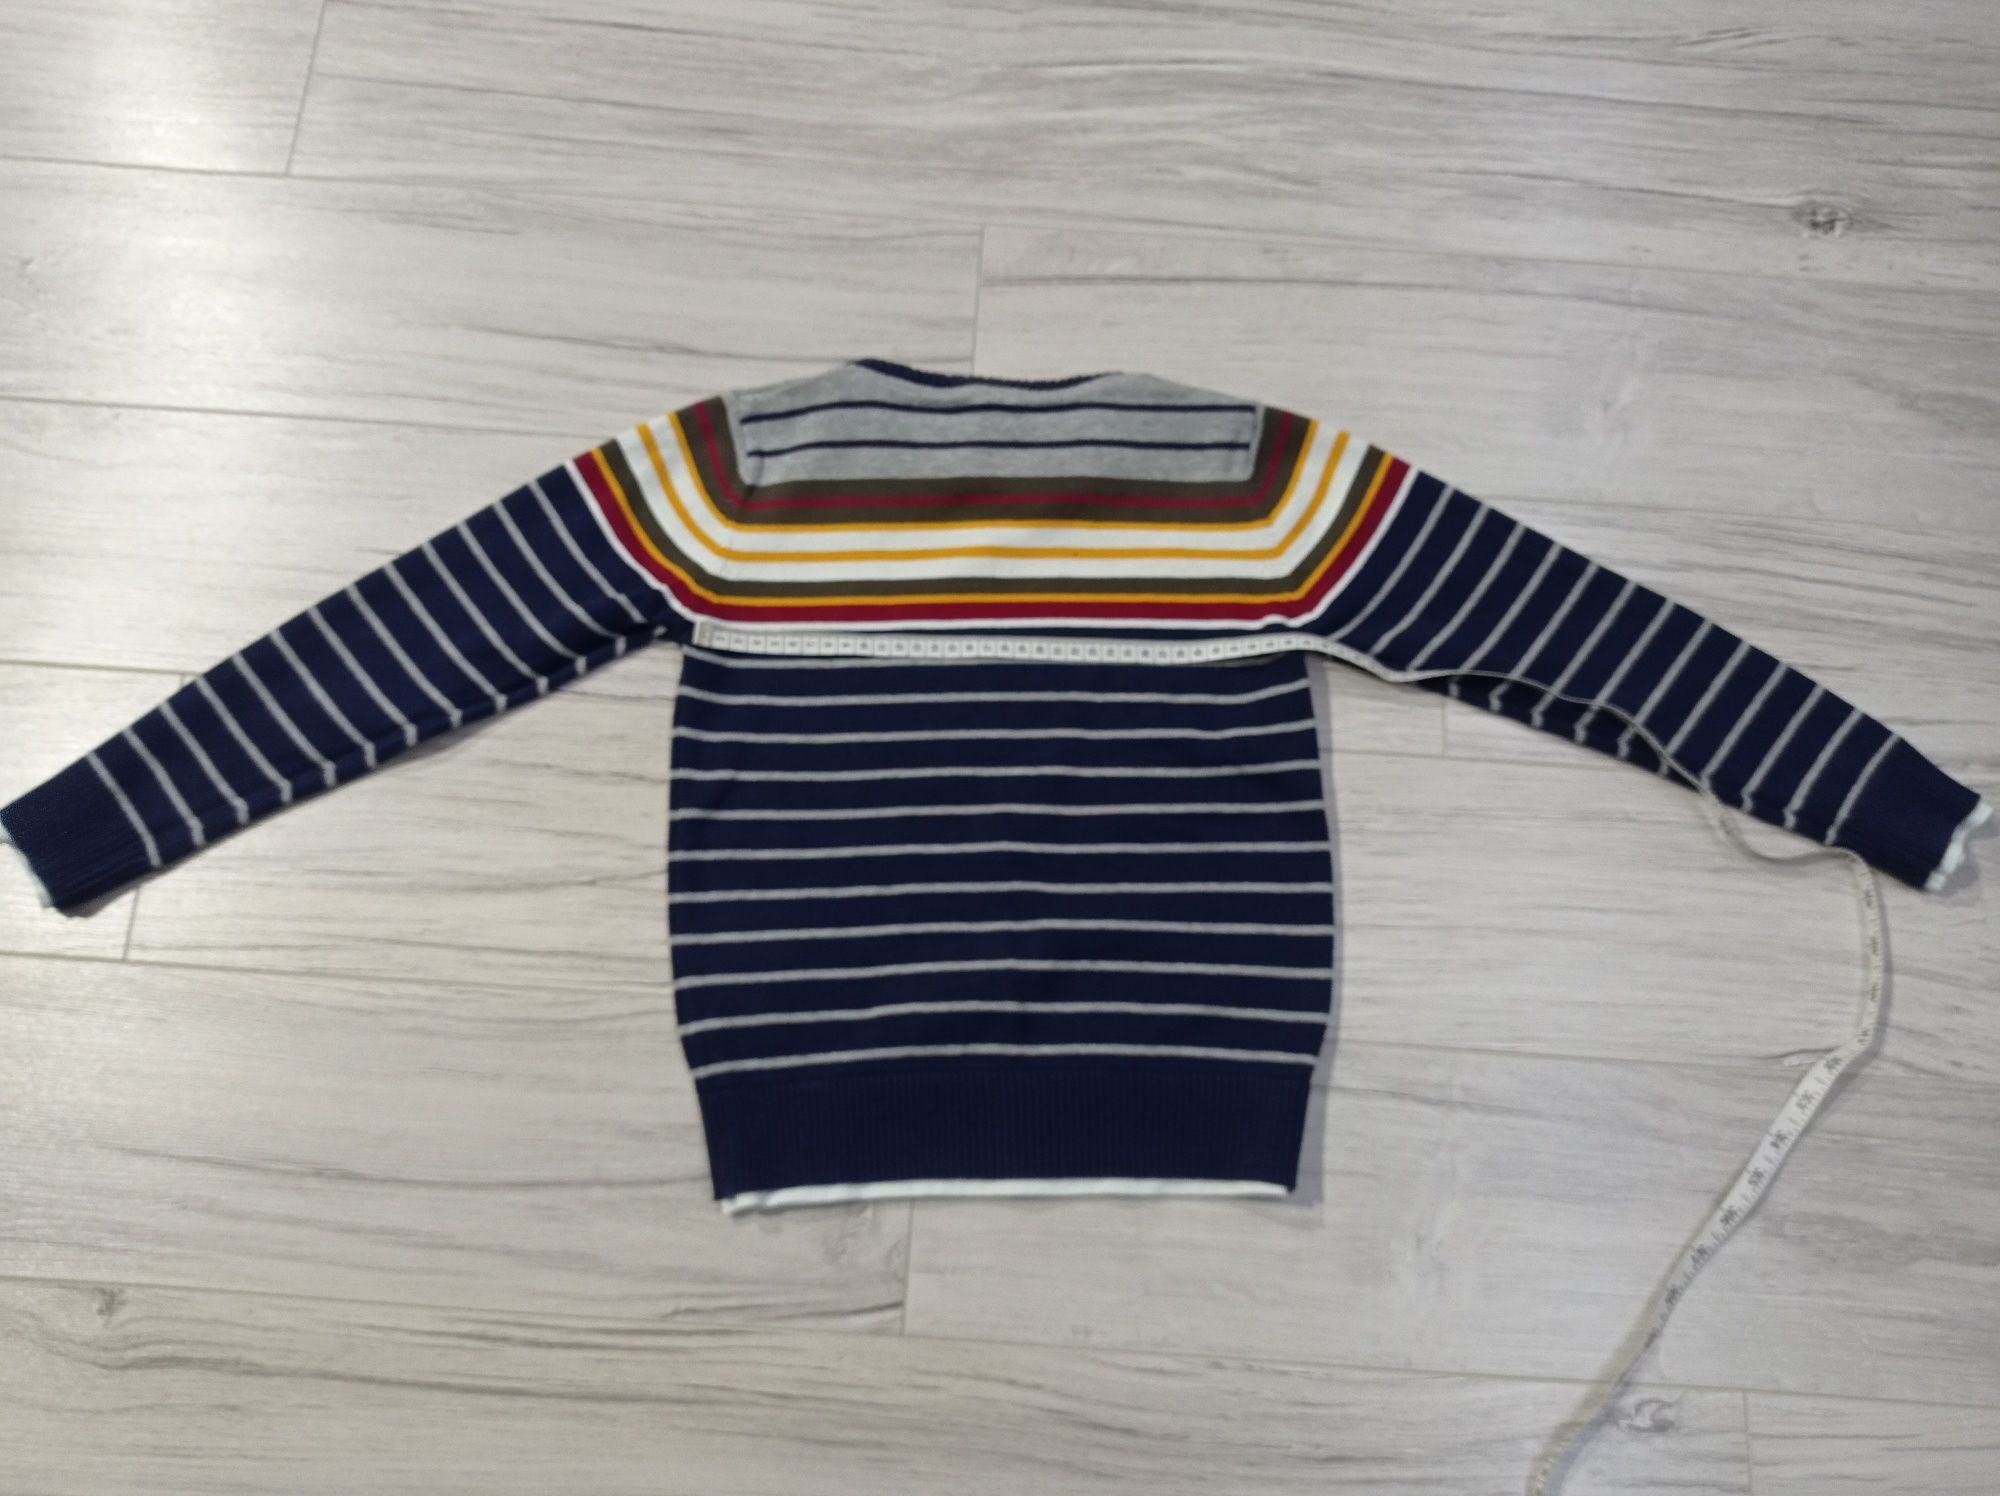 Elegancki sweterek w paski, X-Mail, 128 cm